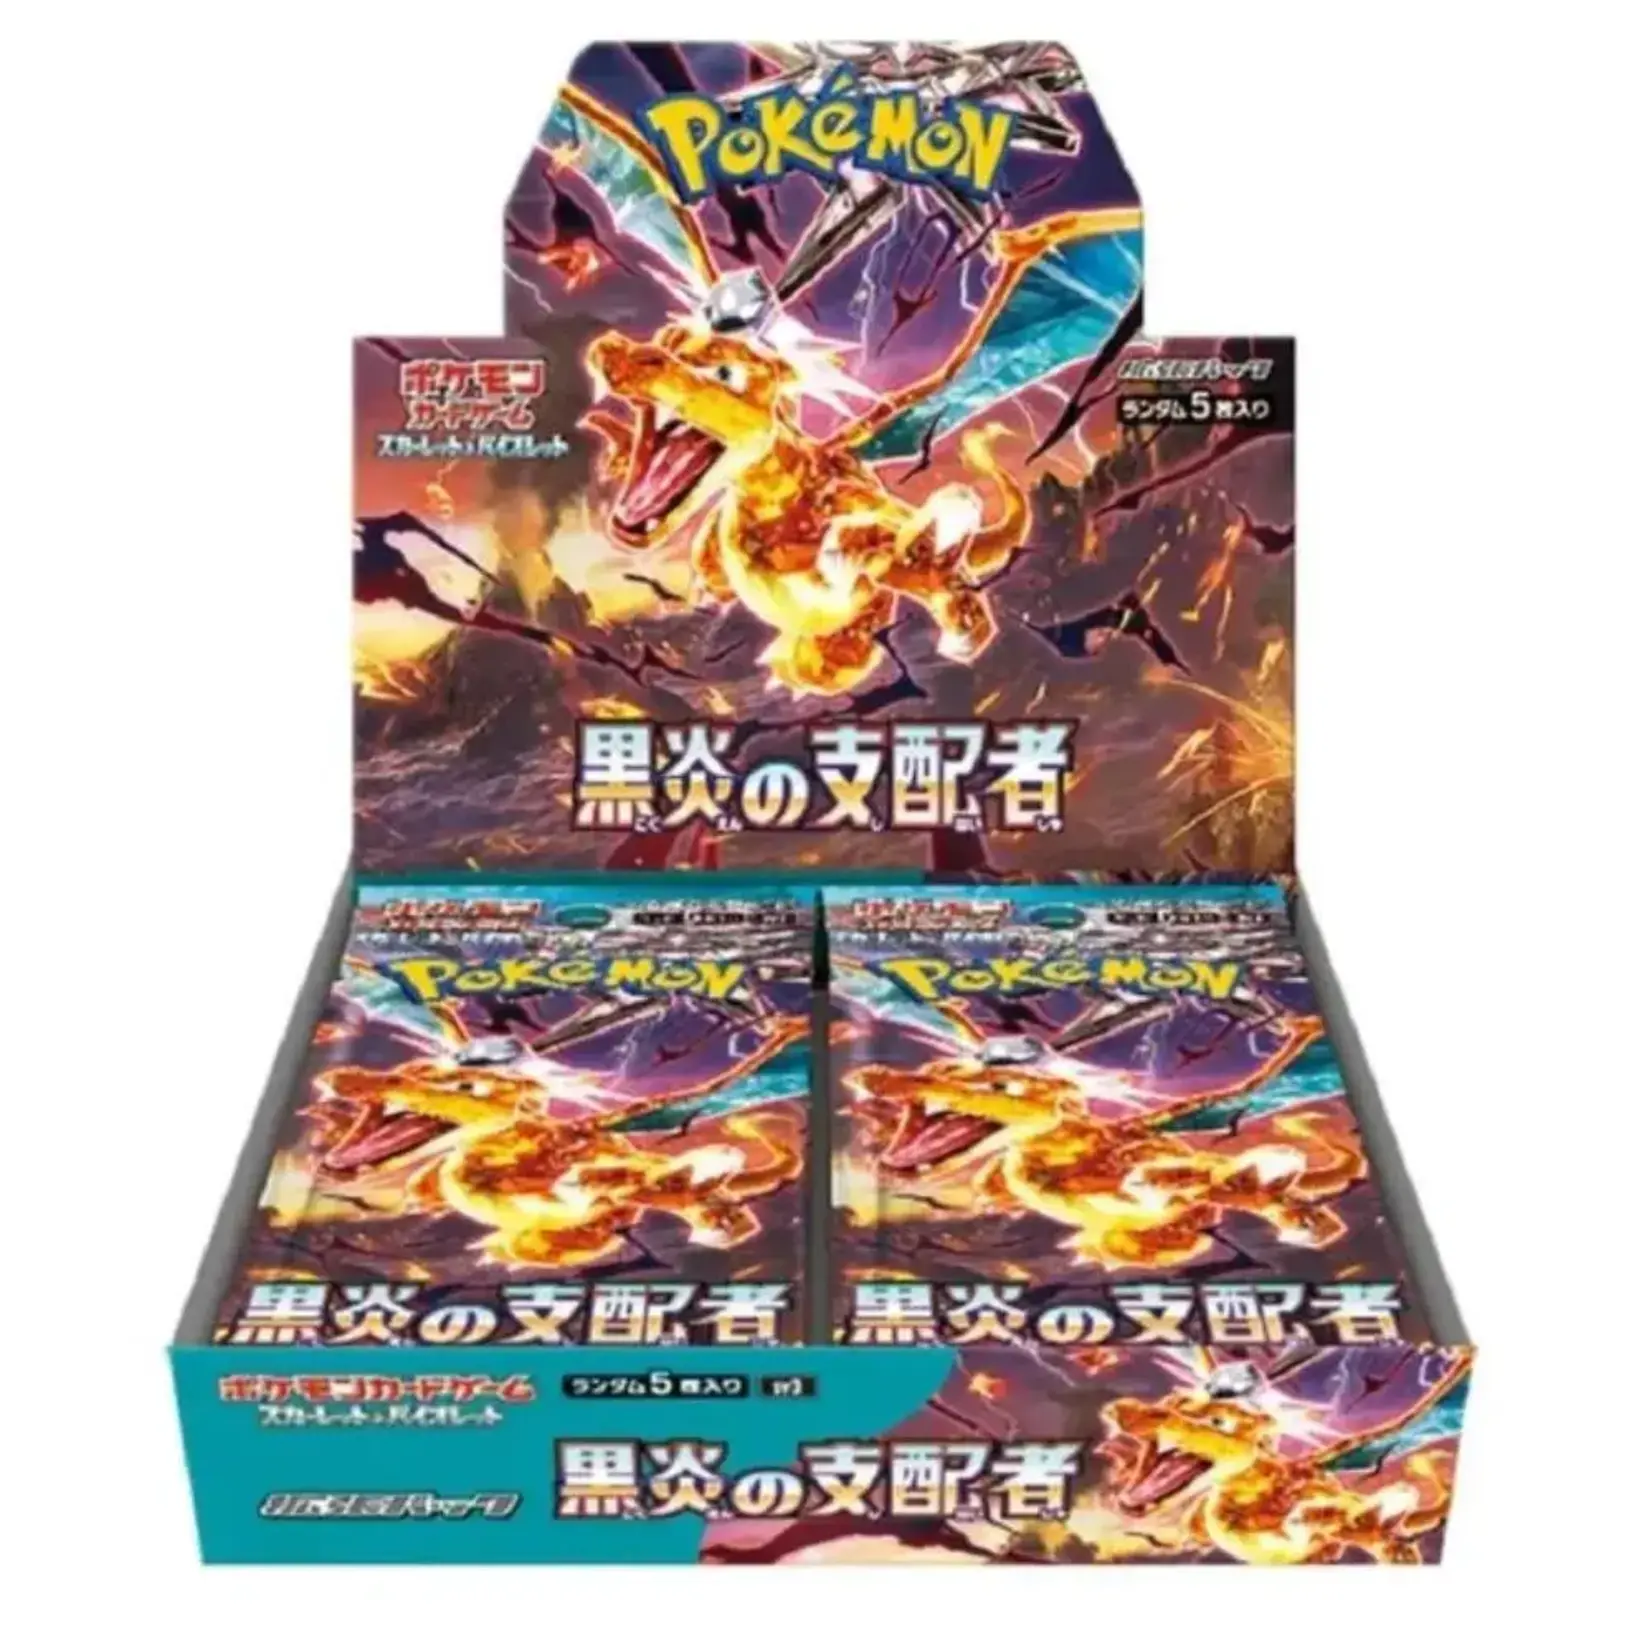 Pokémon TCG: Japanese Ruler of the Black Flame (Sv3) Booster Box (30